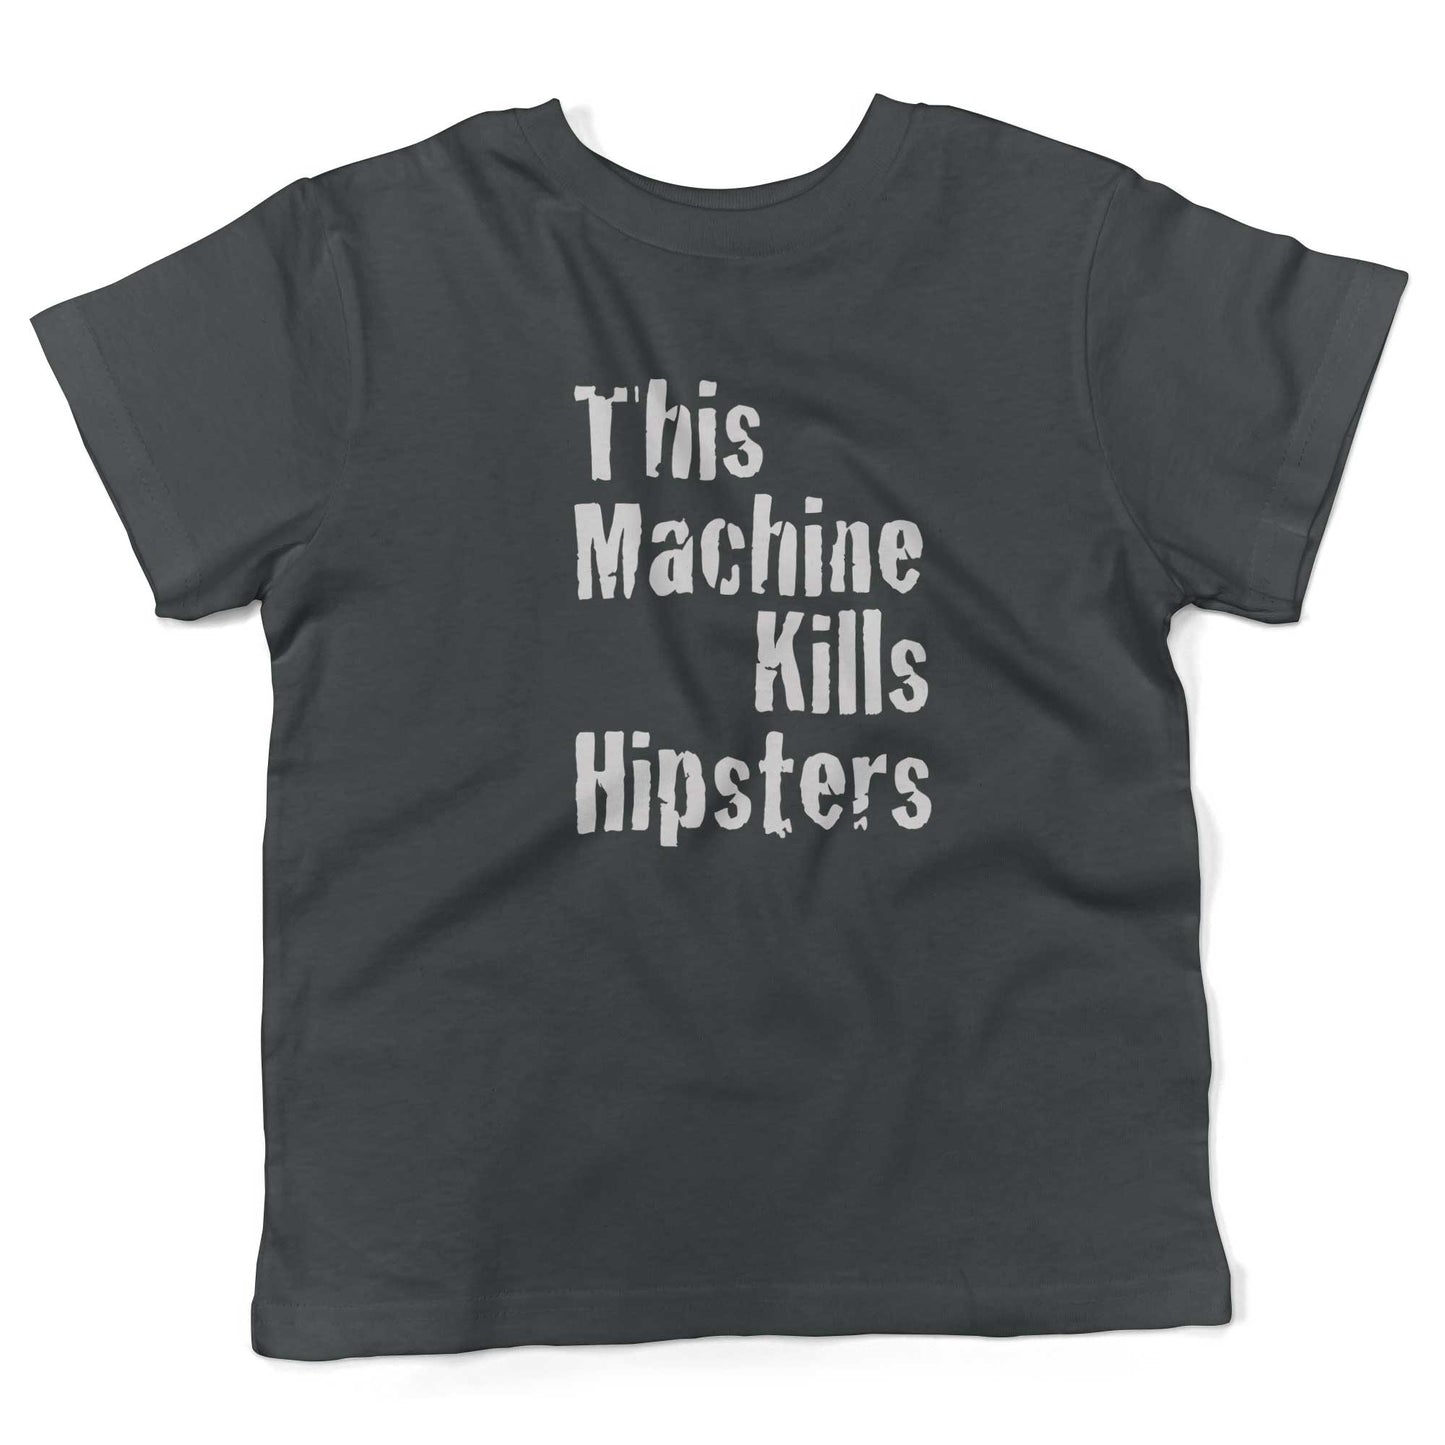 This Machine Kills Hipsters Toddler Shirt-Asphalt-2T